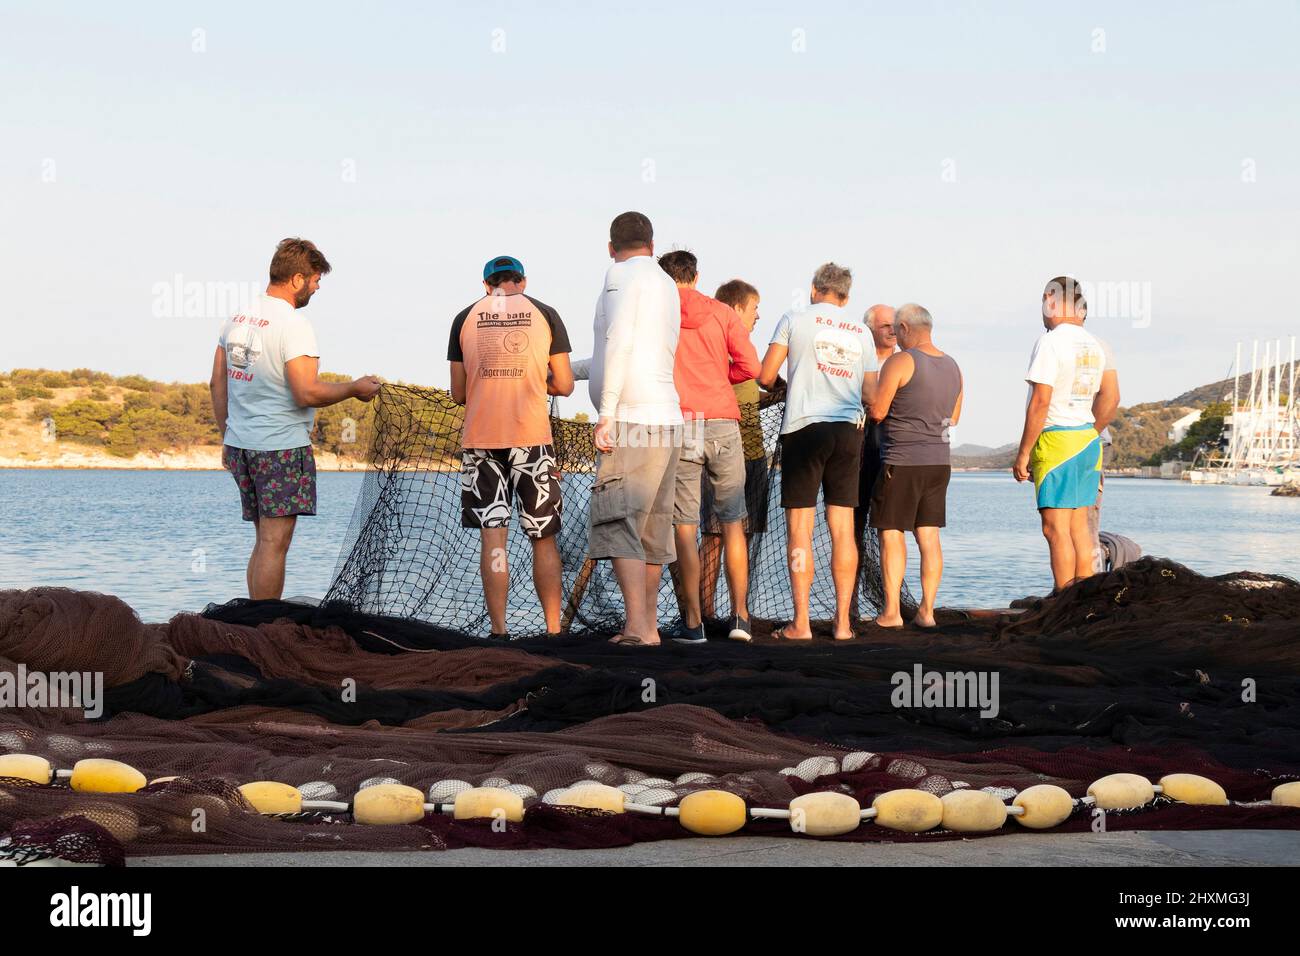 Tribunj, Croatia- August 23, 2021: Group of fishermen repairing the fishing net on the seaside dock Stock Photo